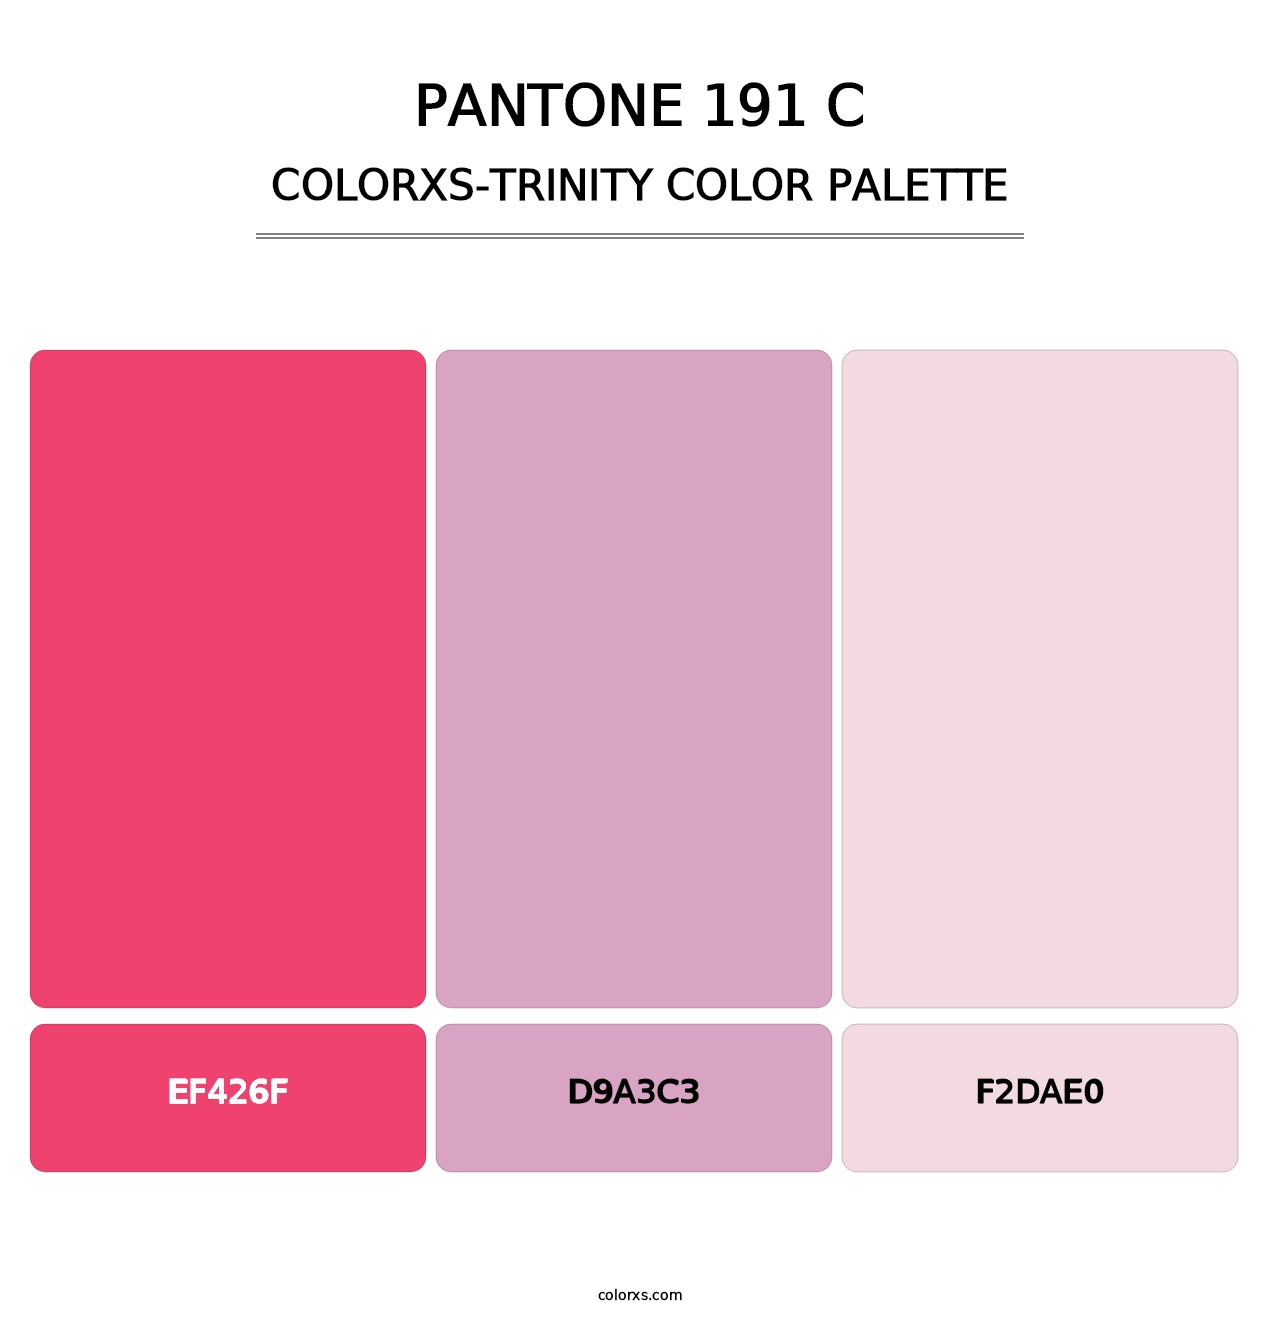 PANTONE 191 C - Colorxs Trinity Palette